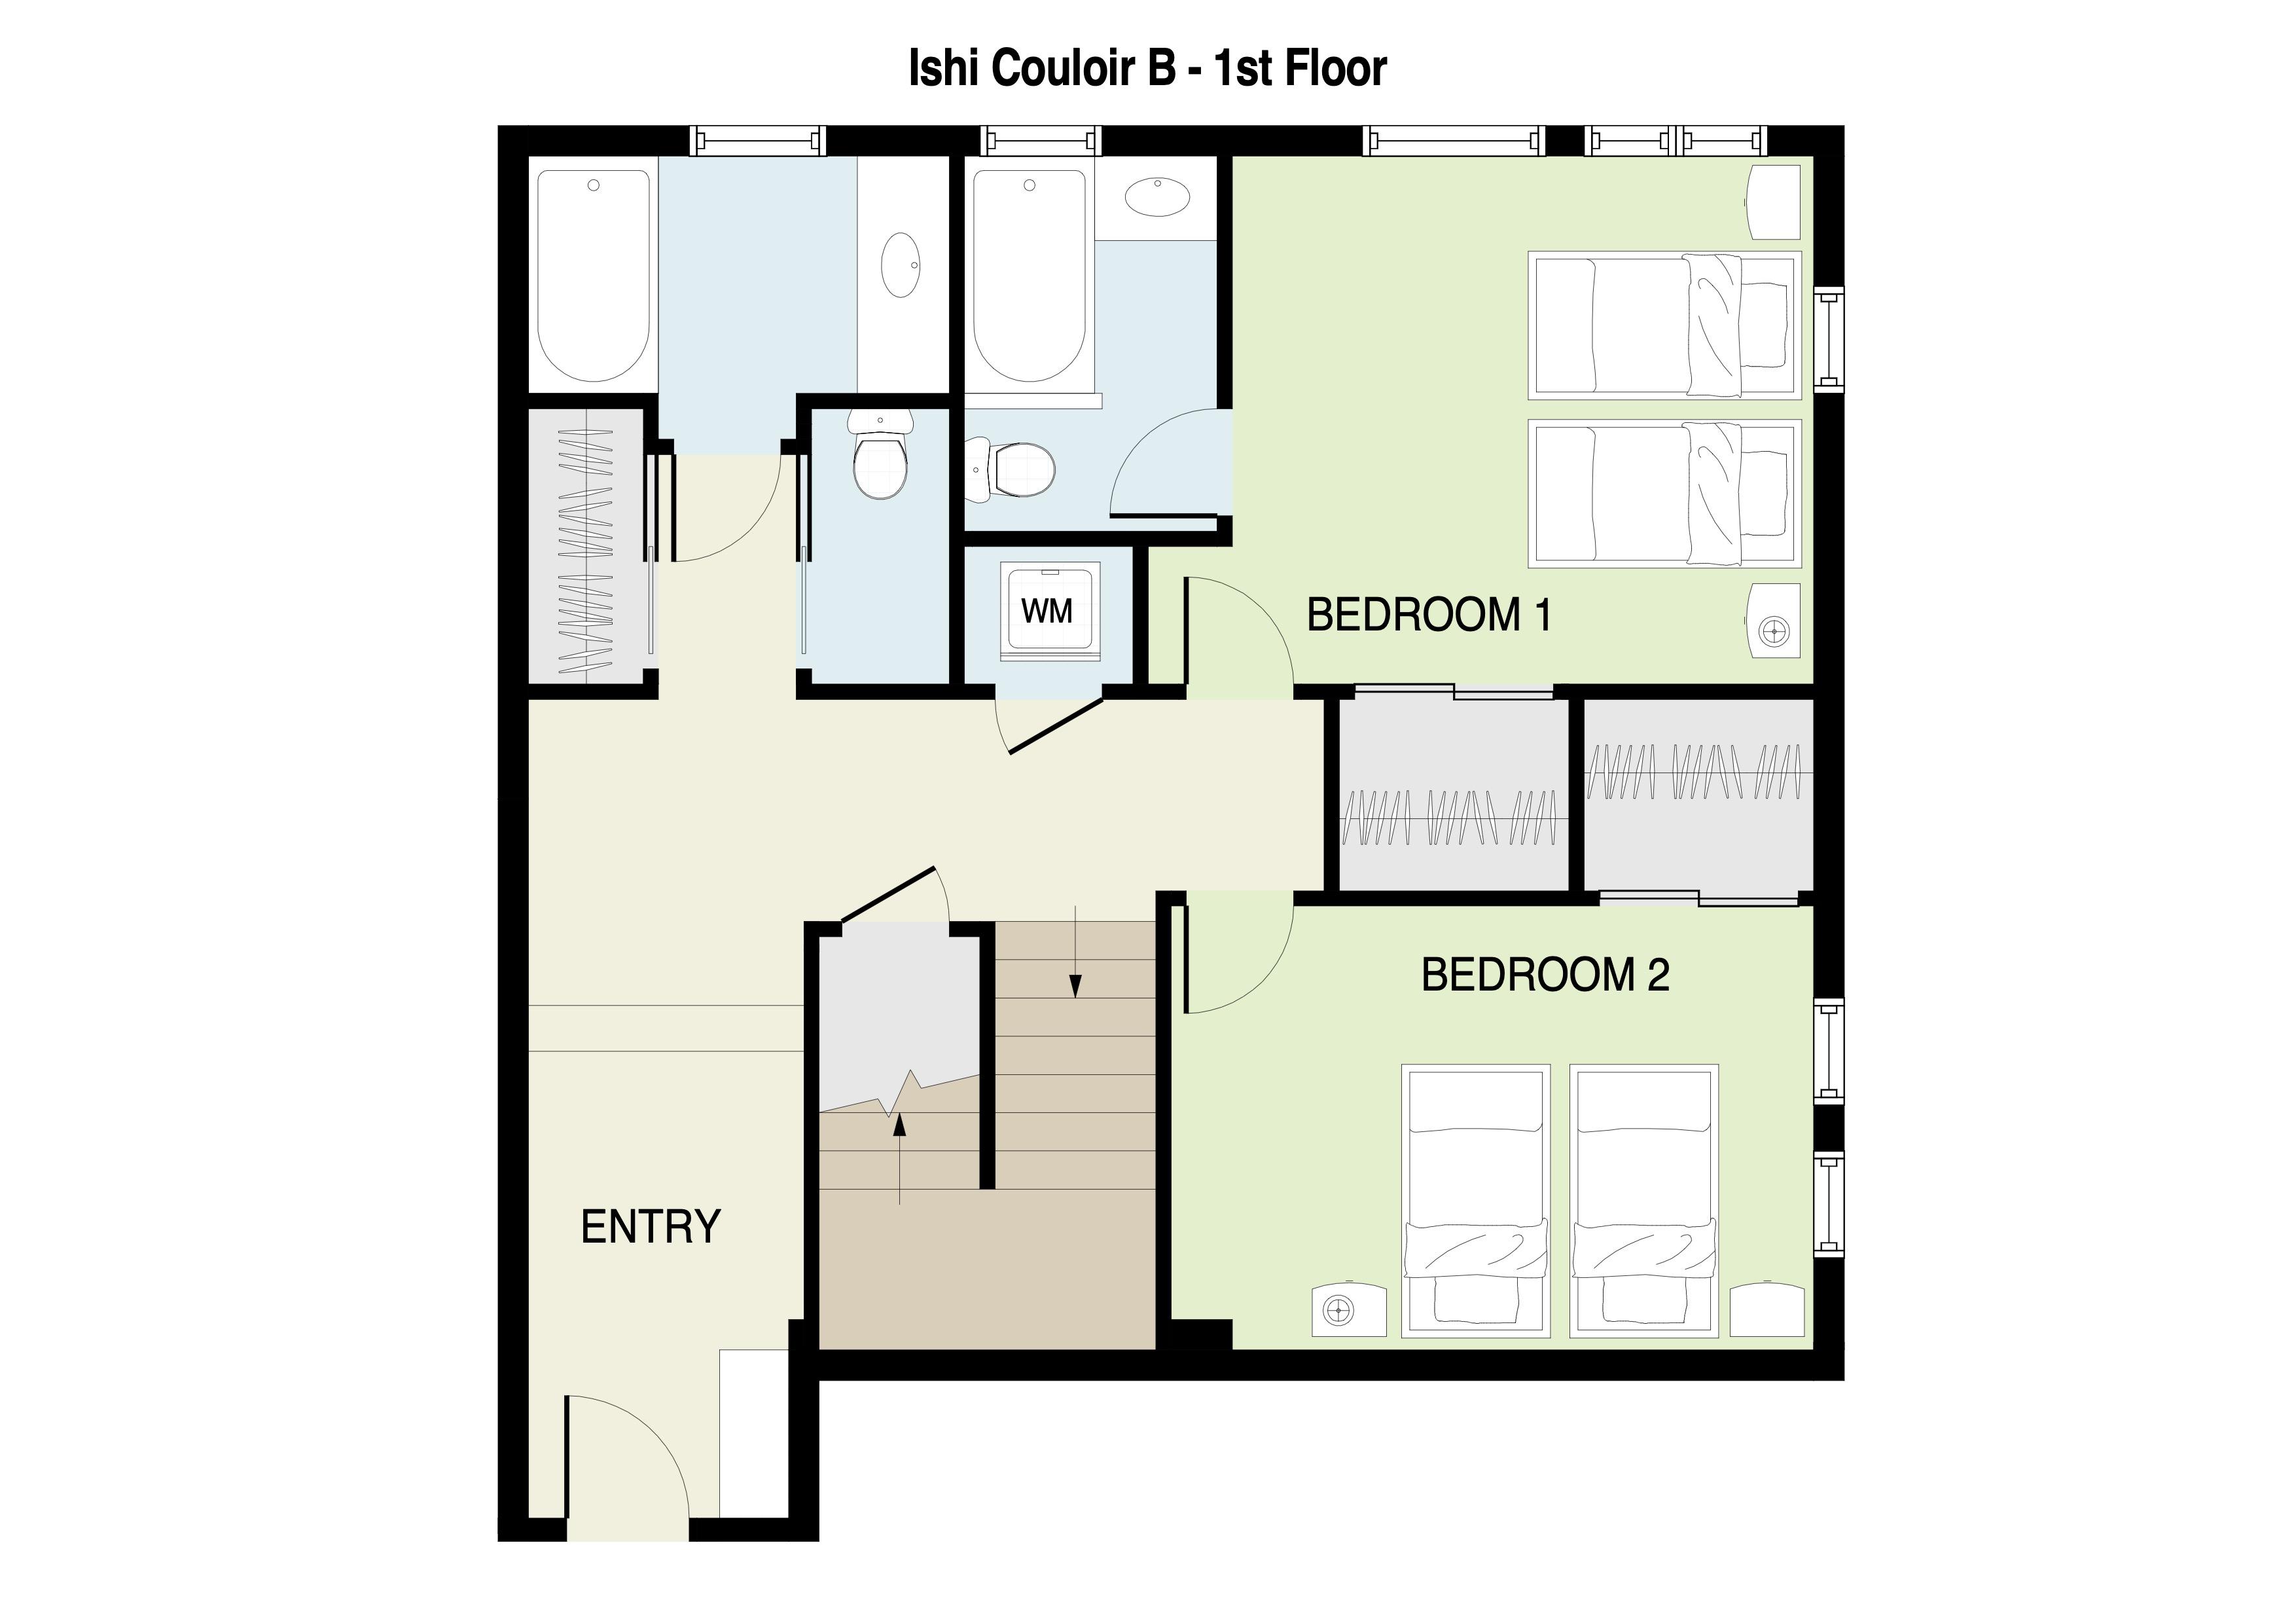 Ishi Couloir B First Floor Plan